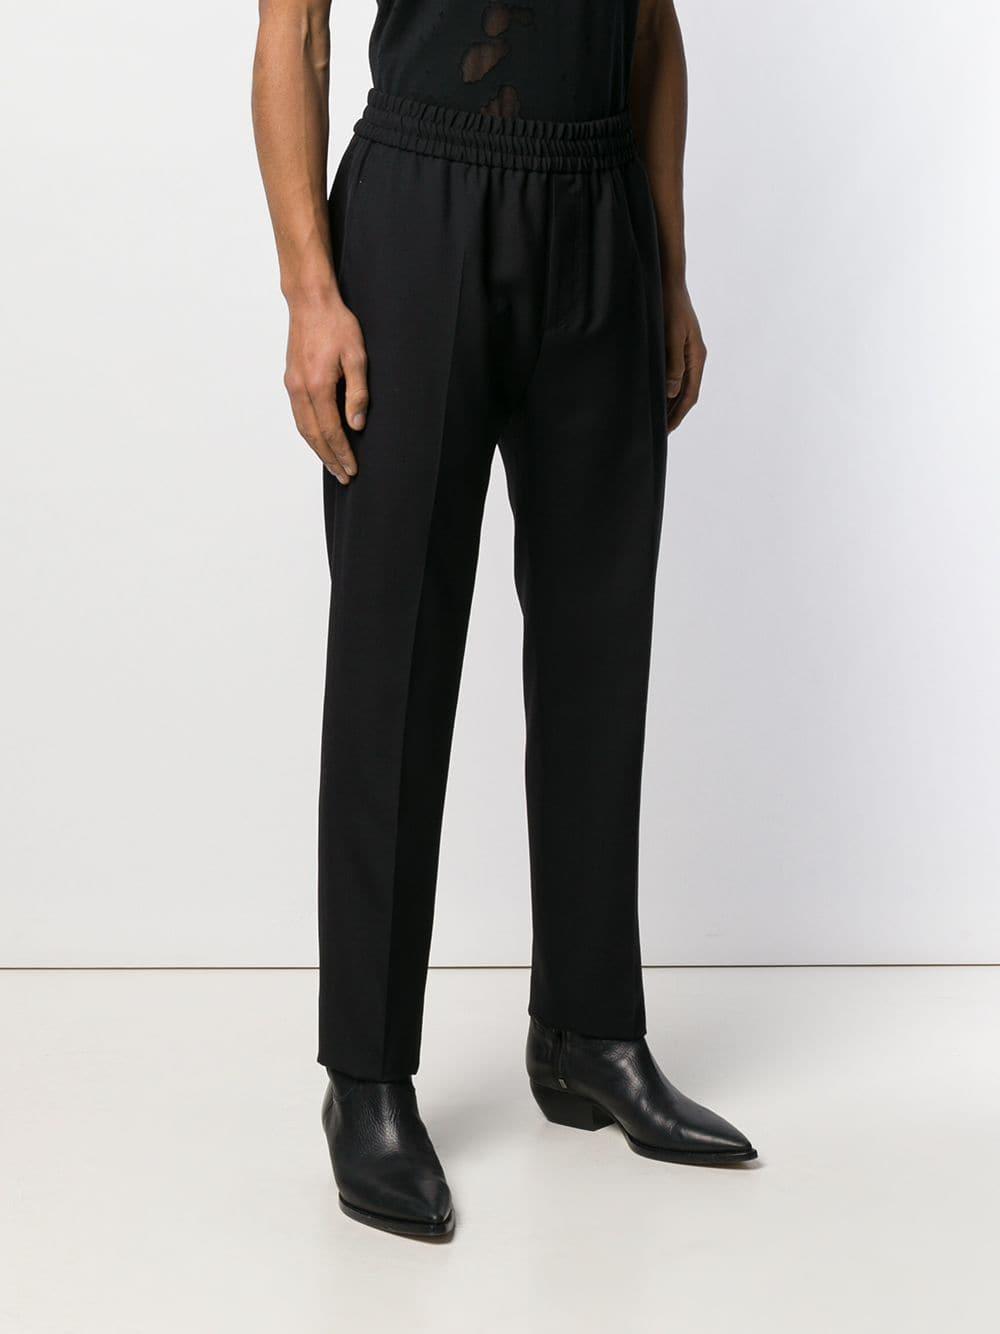 Givenchy Wool Vertical Logo jogger Pants in Black for Men - Lyst